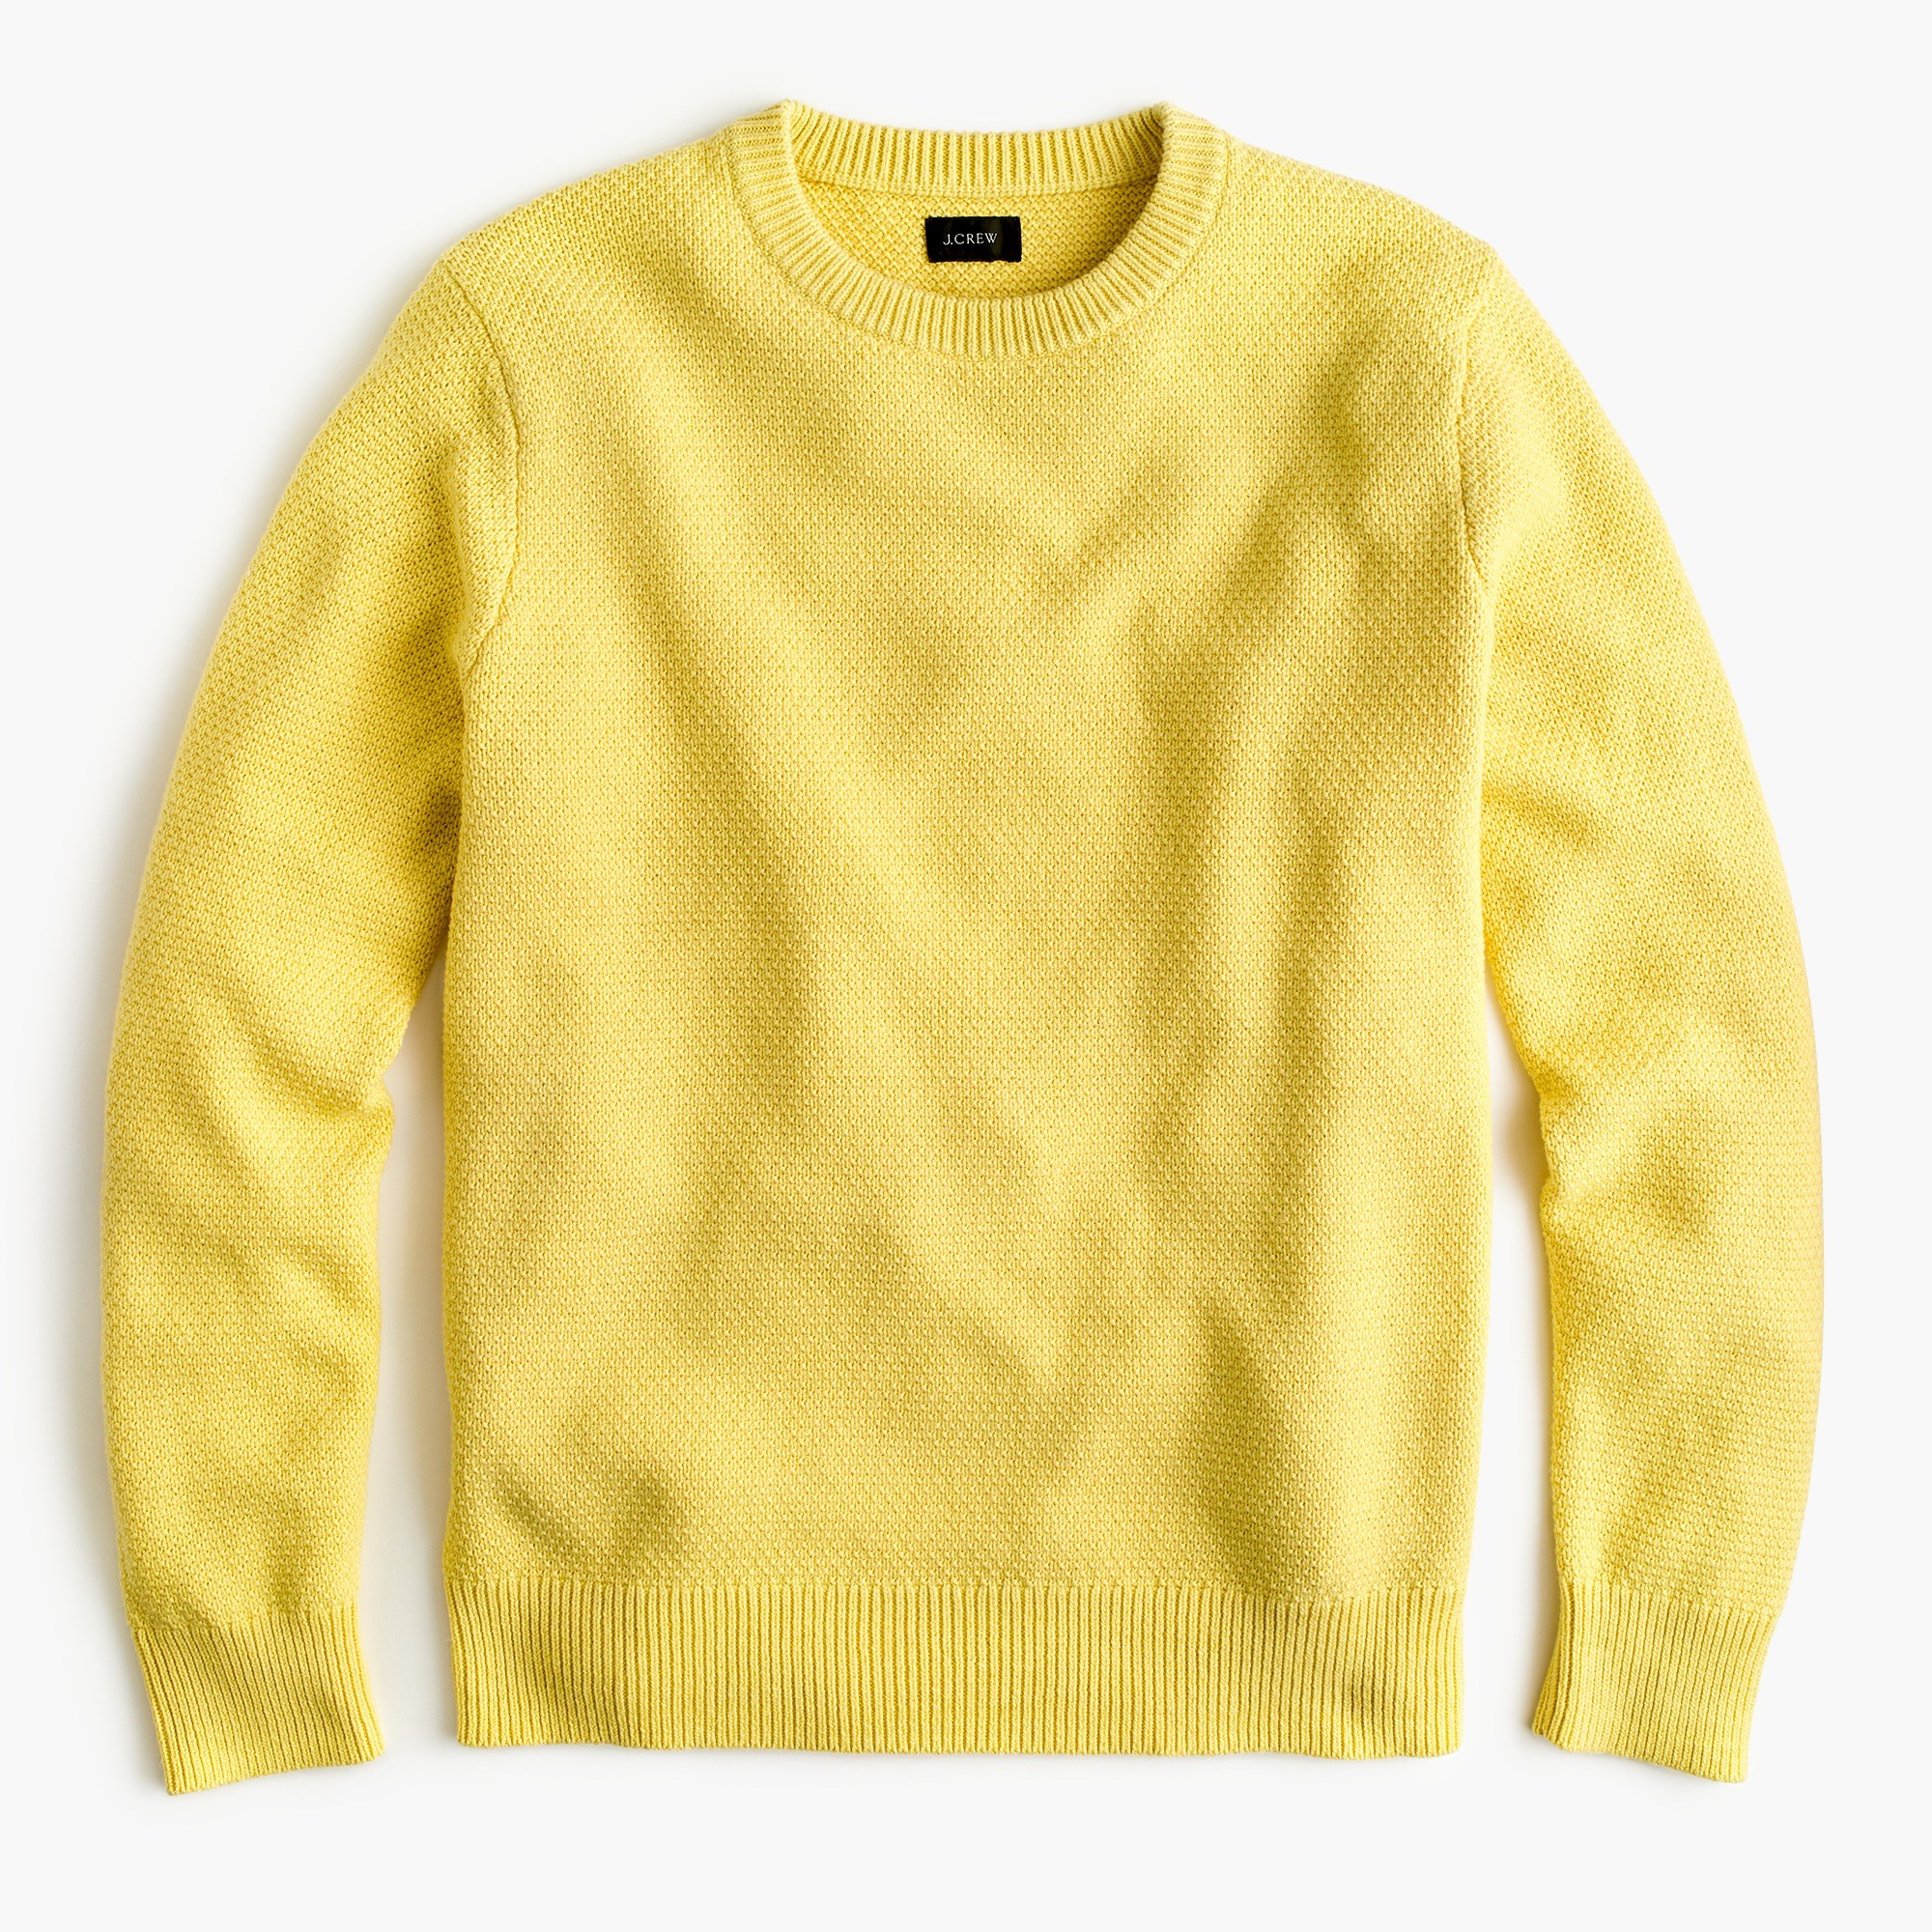 Men's Sweaters - Cardigans, V-Necks & More | J.Crew